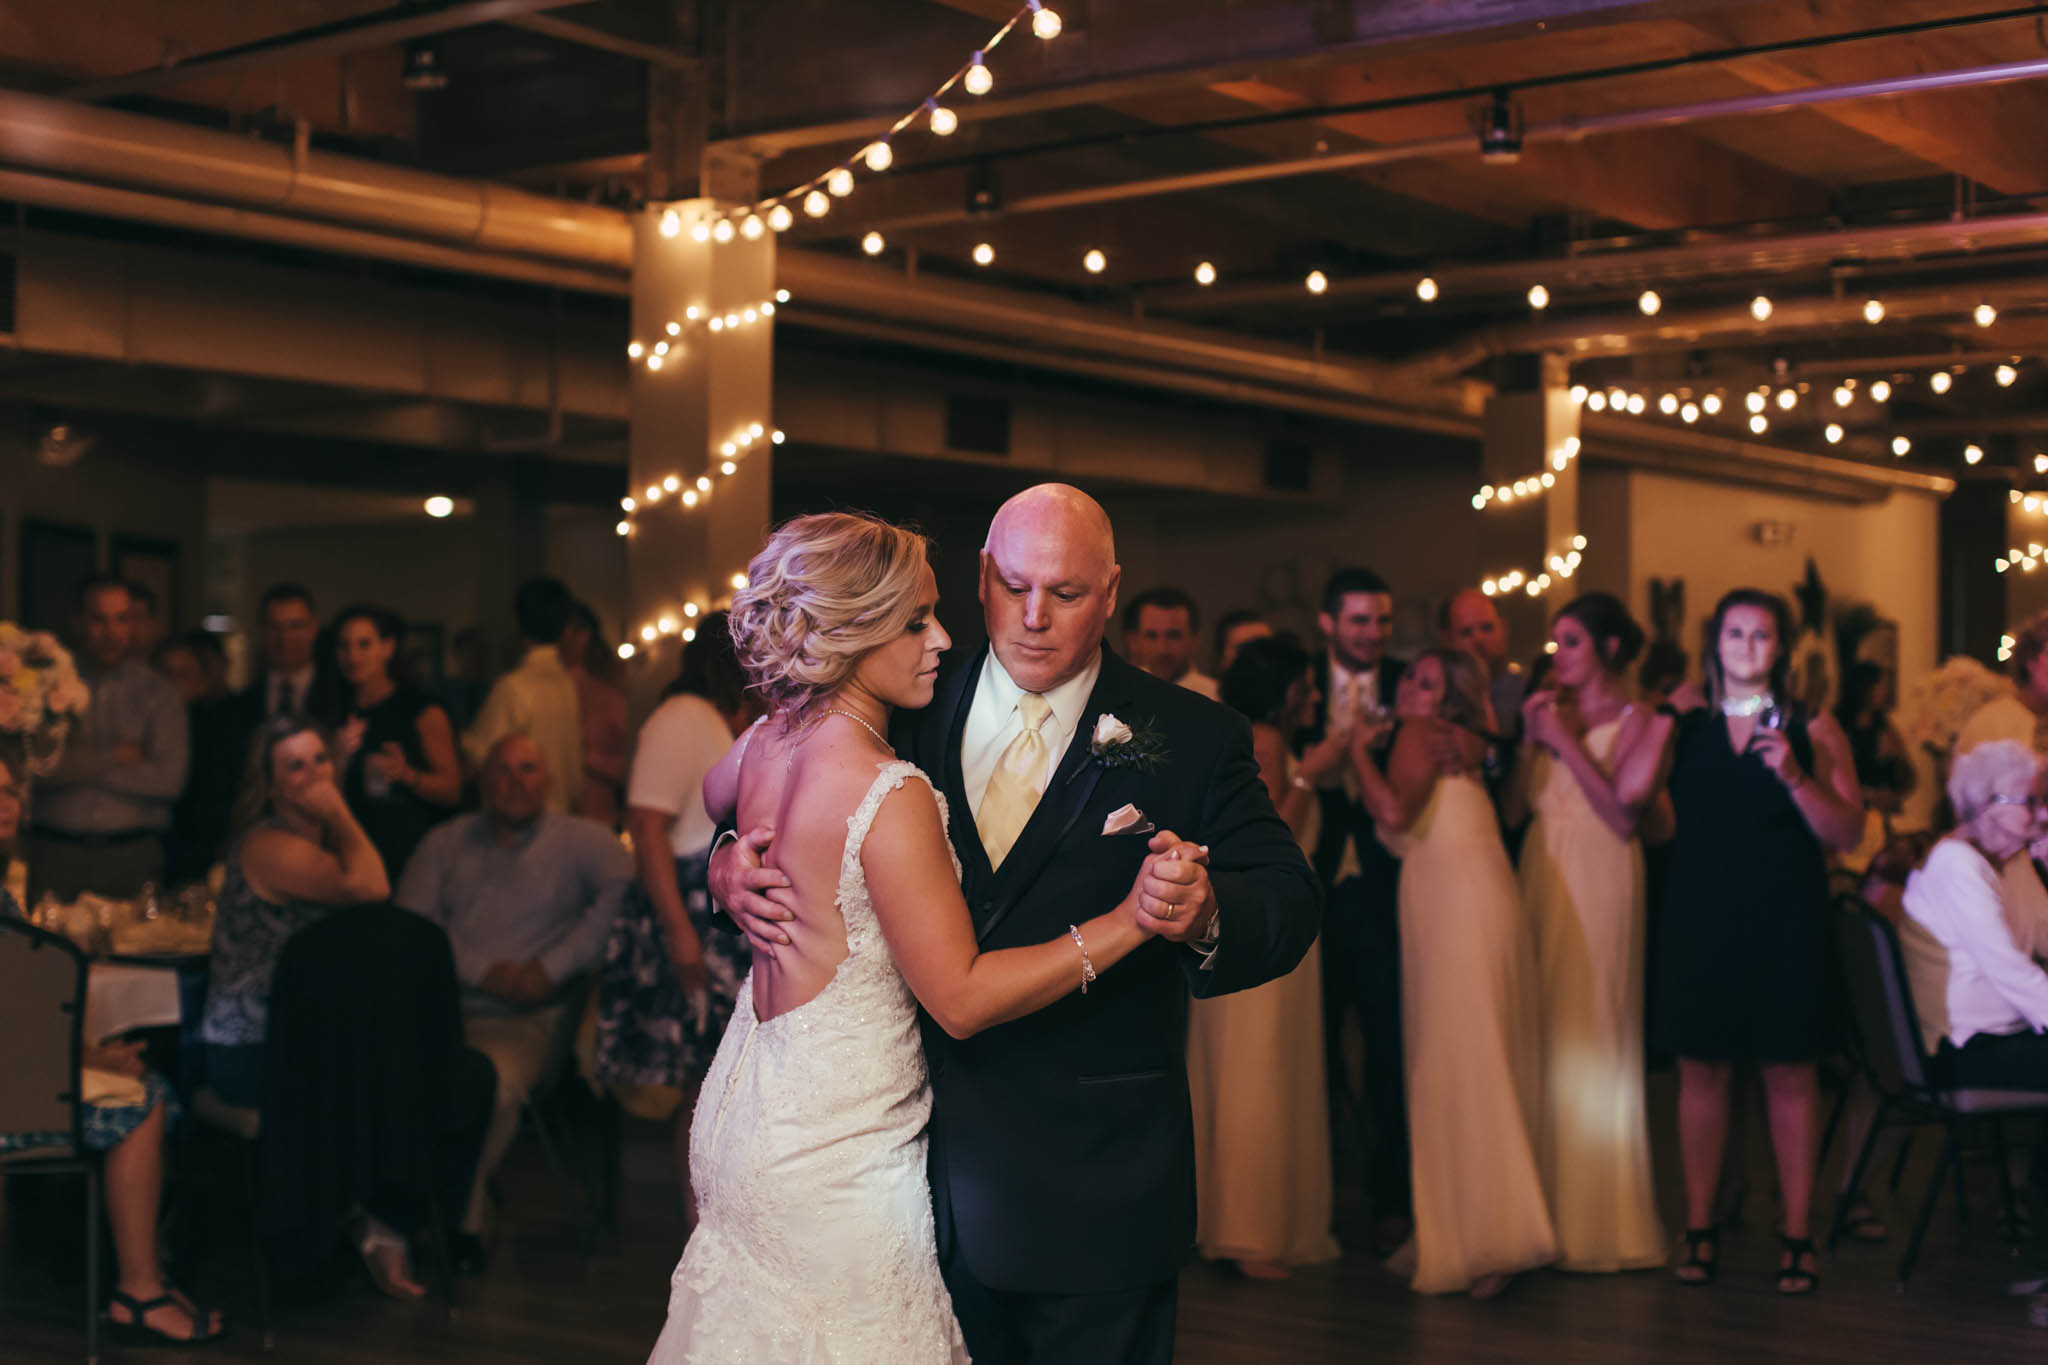 Jillian VanZytveld Photography - Grand Rapids Lifestyle Wedding Photography - 202.jpg